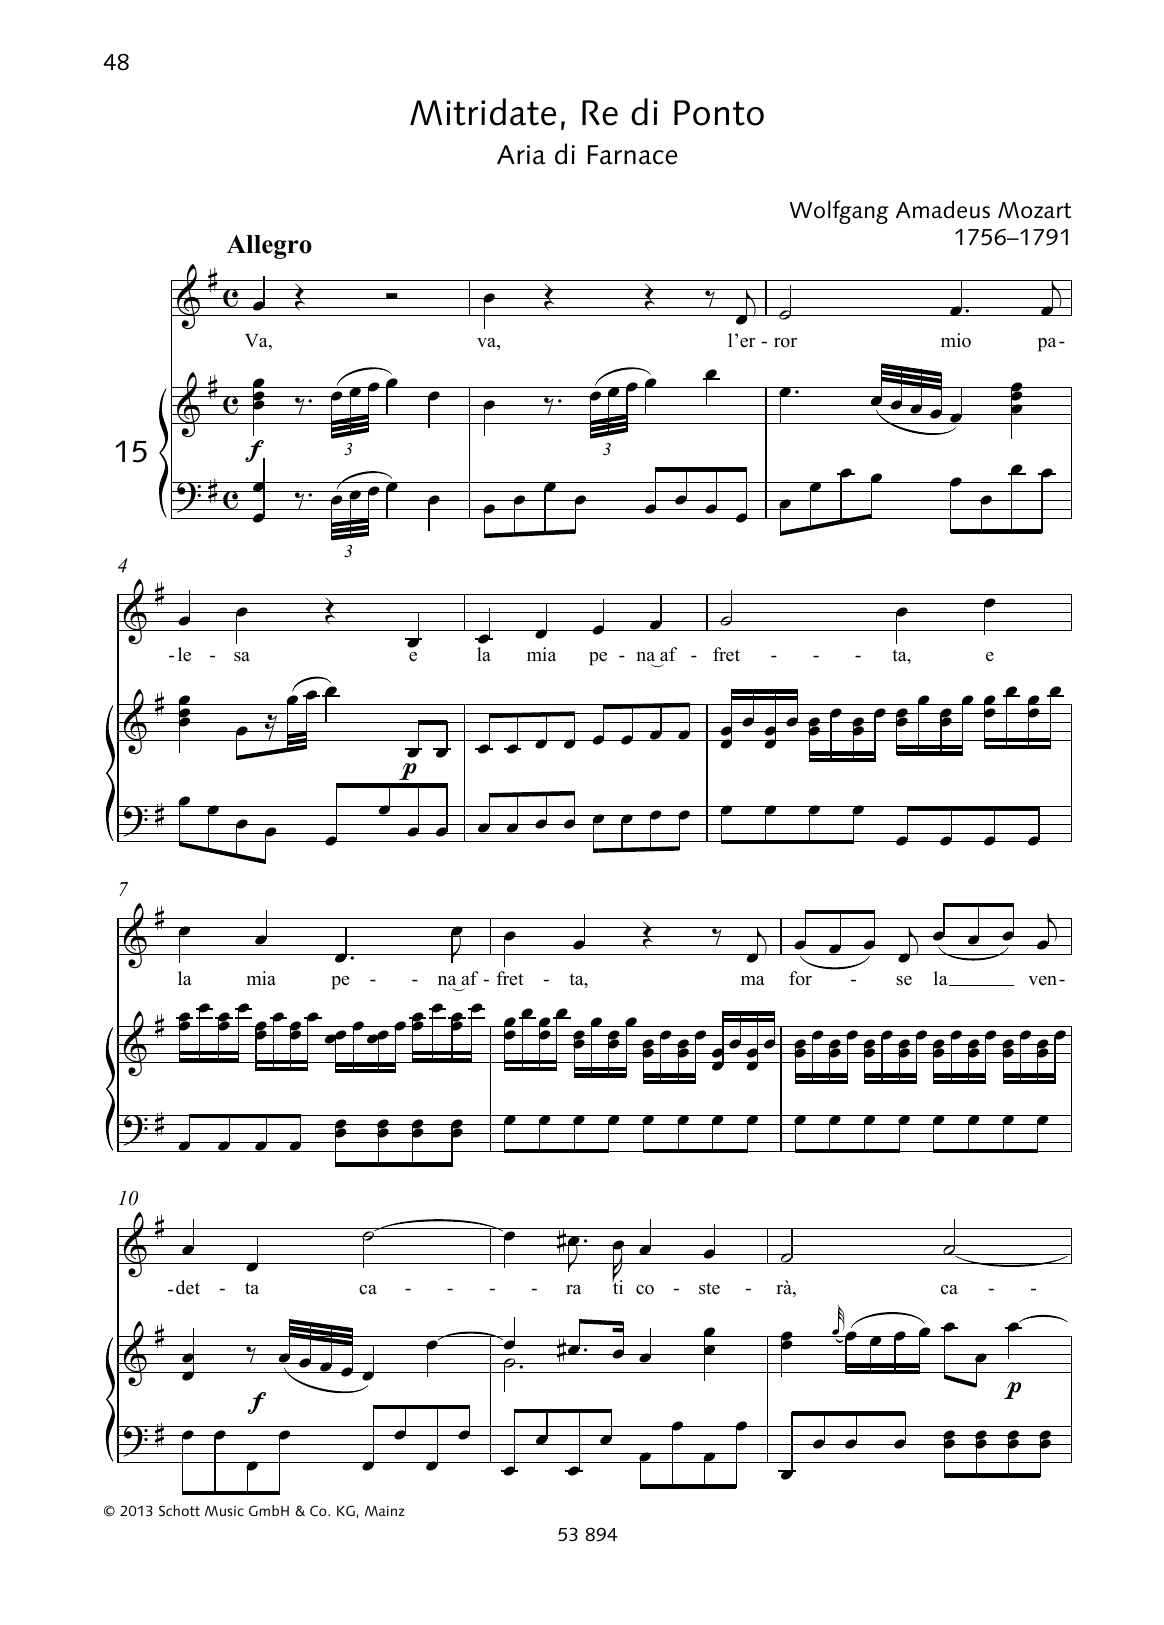 Wolfgang Amadeus Mozart Va, va, l'error mio palesa Sheet Music Notes & Chords for Piano & Vocal - Download or Print PDF